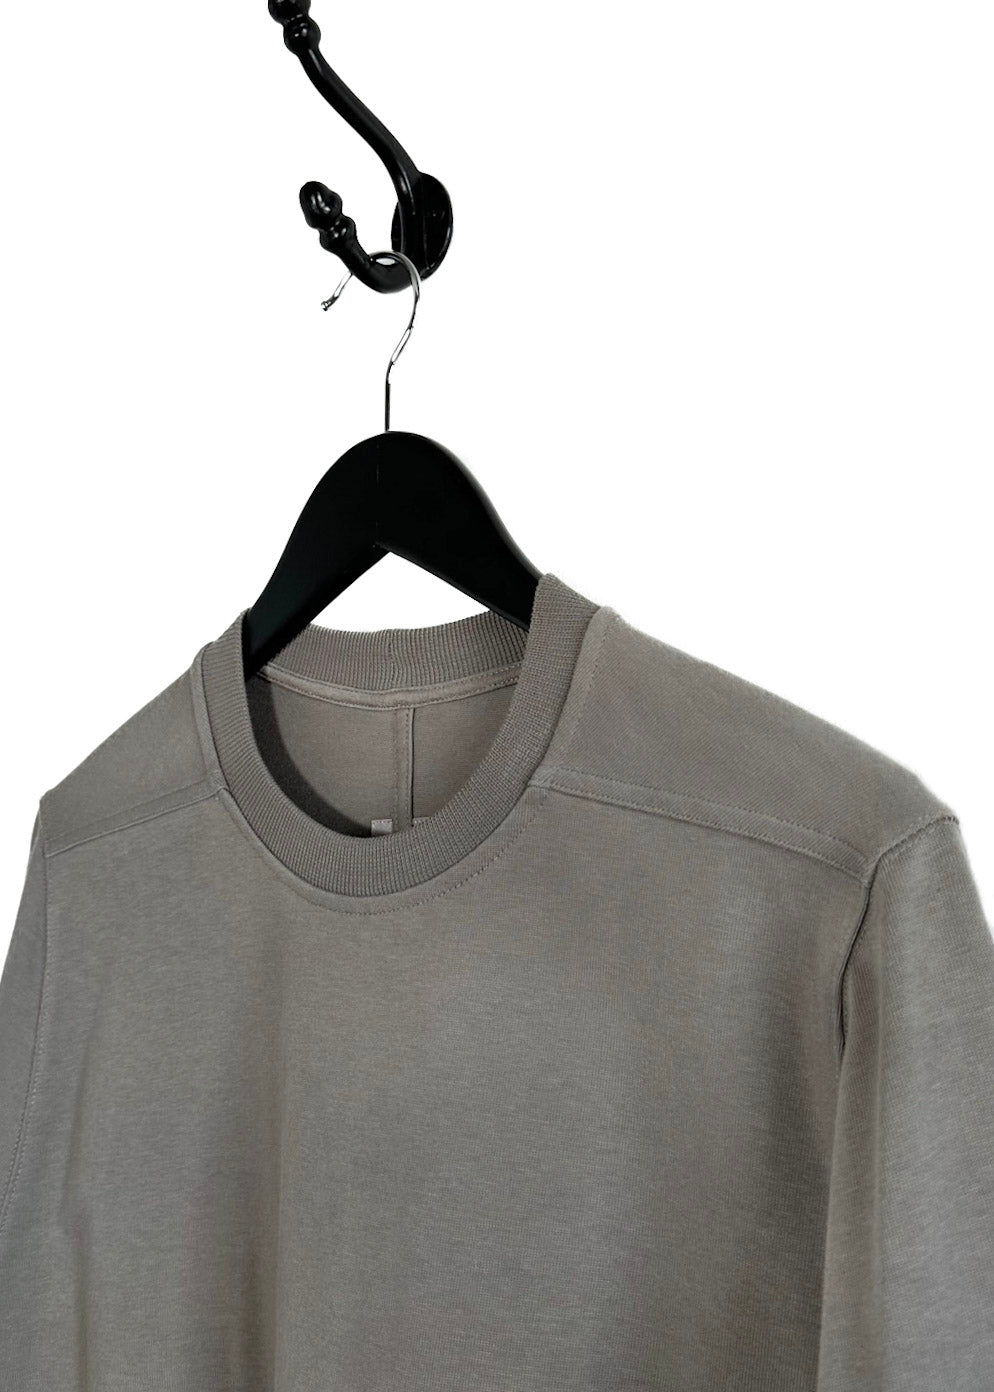 Rick Owens SS21 Phlegethon Dust Grey Long Sleeves T-shirt